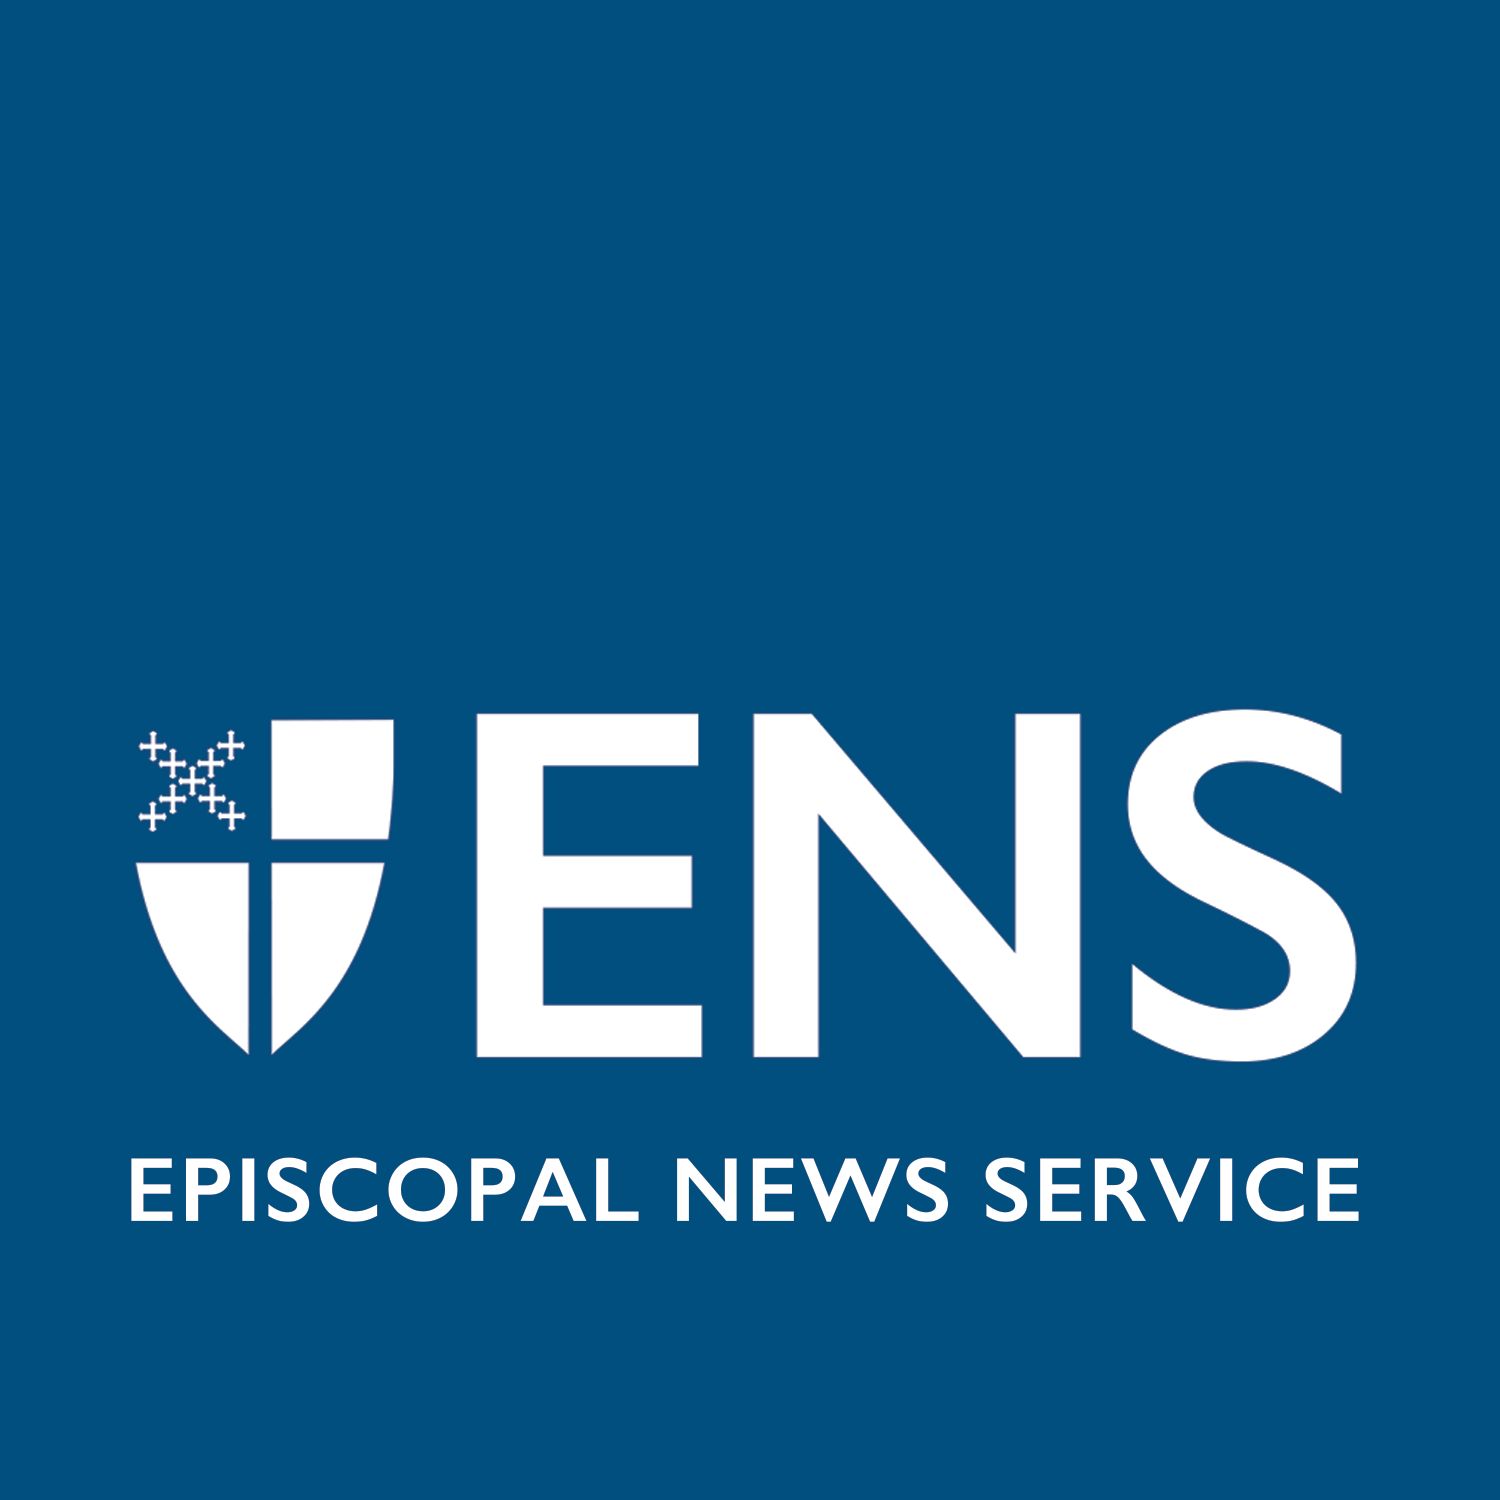 ENS: Episcopal News Service